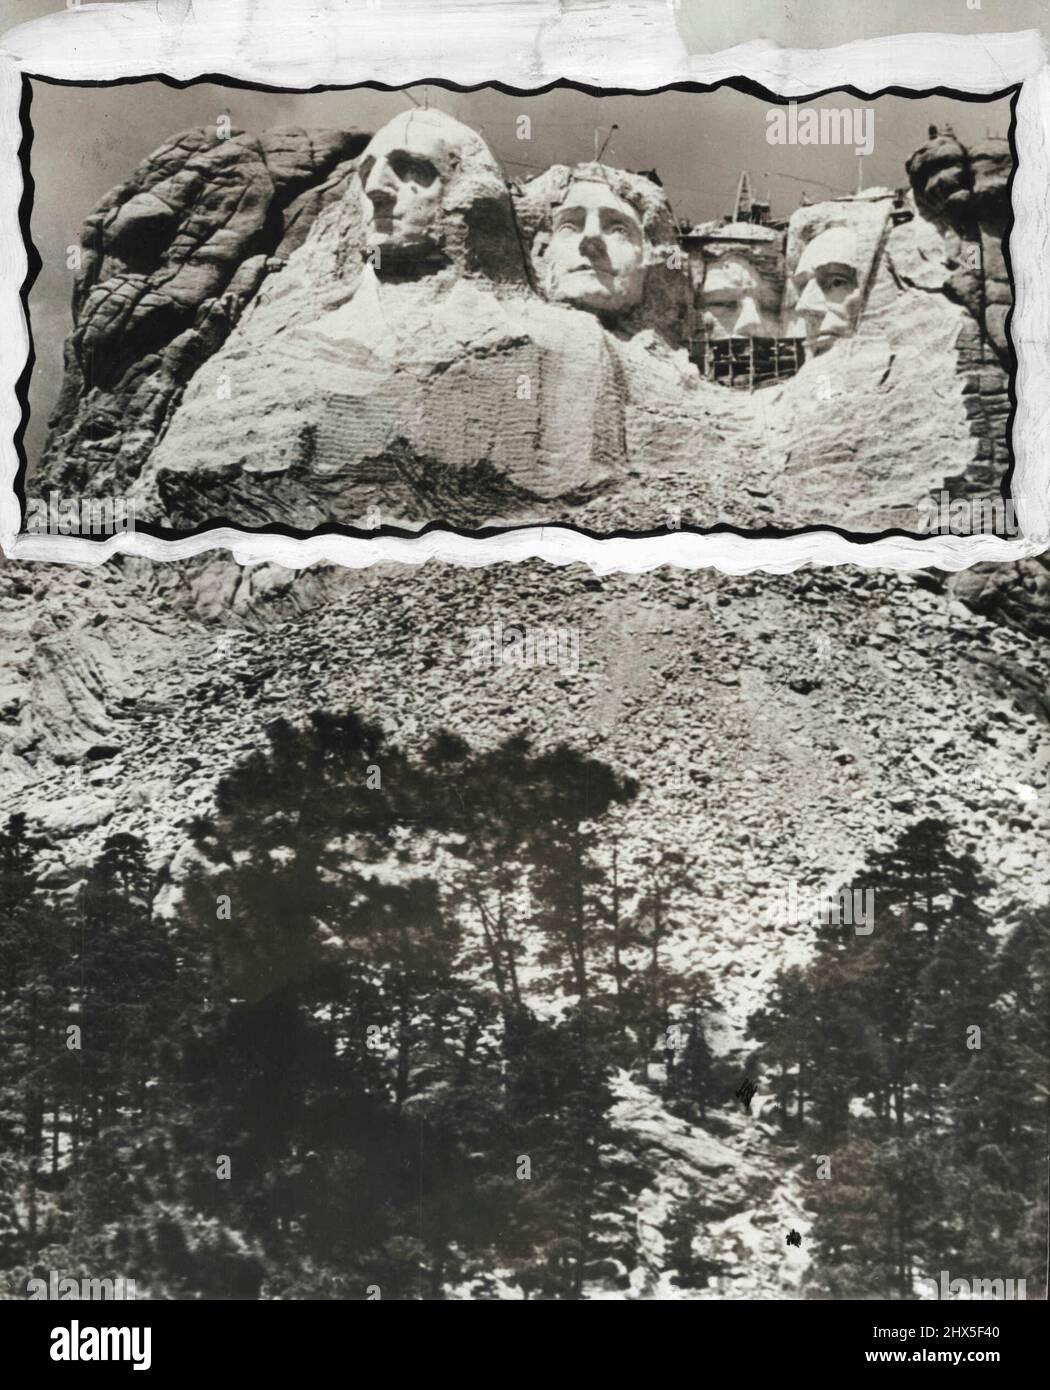 Mount Rushmore South Dakota Ave of Flags Postcard President George Washington 